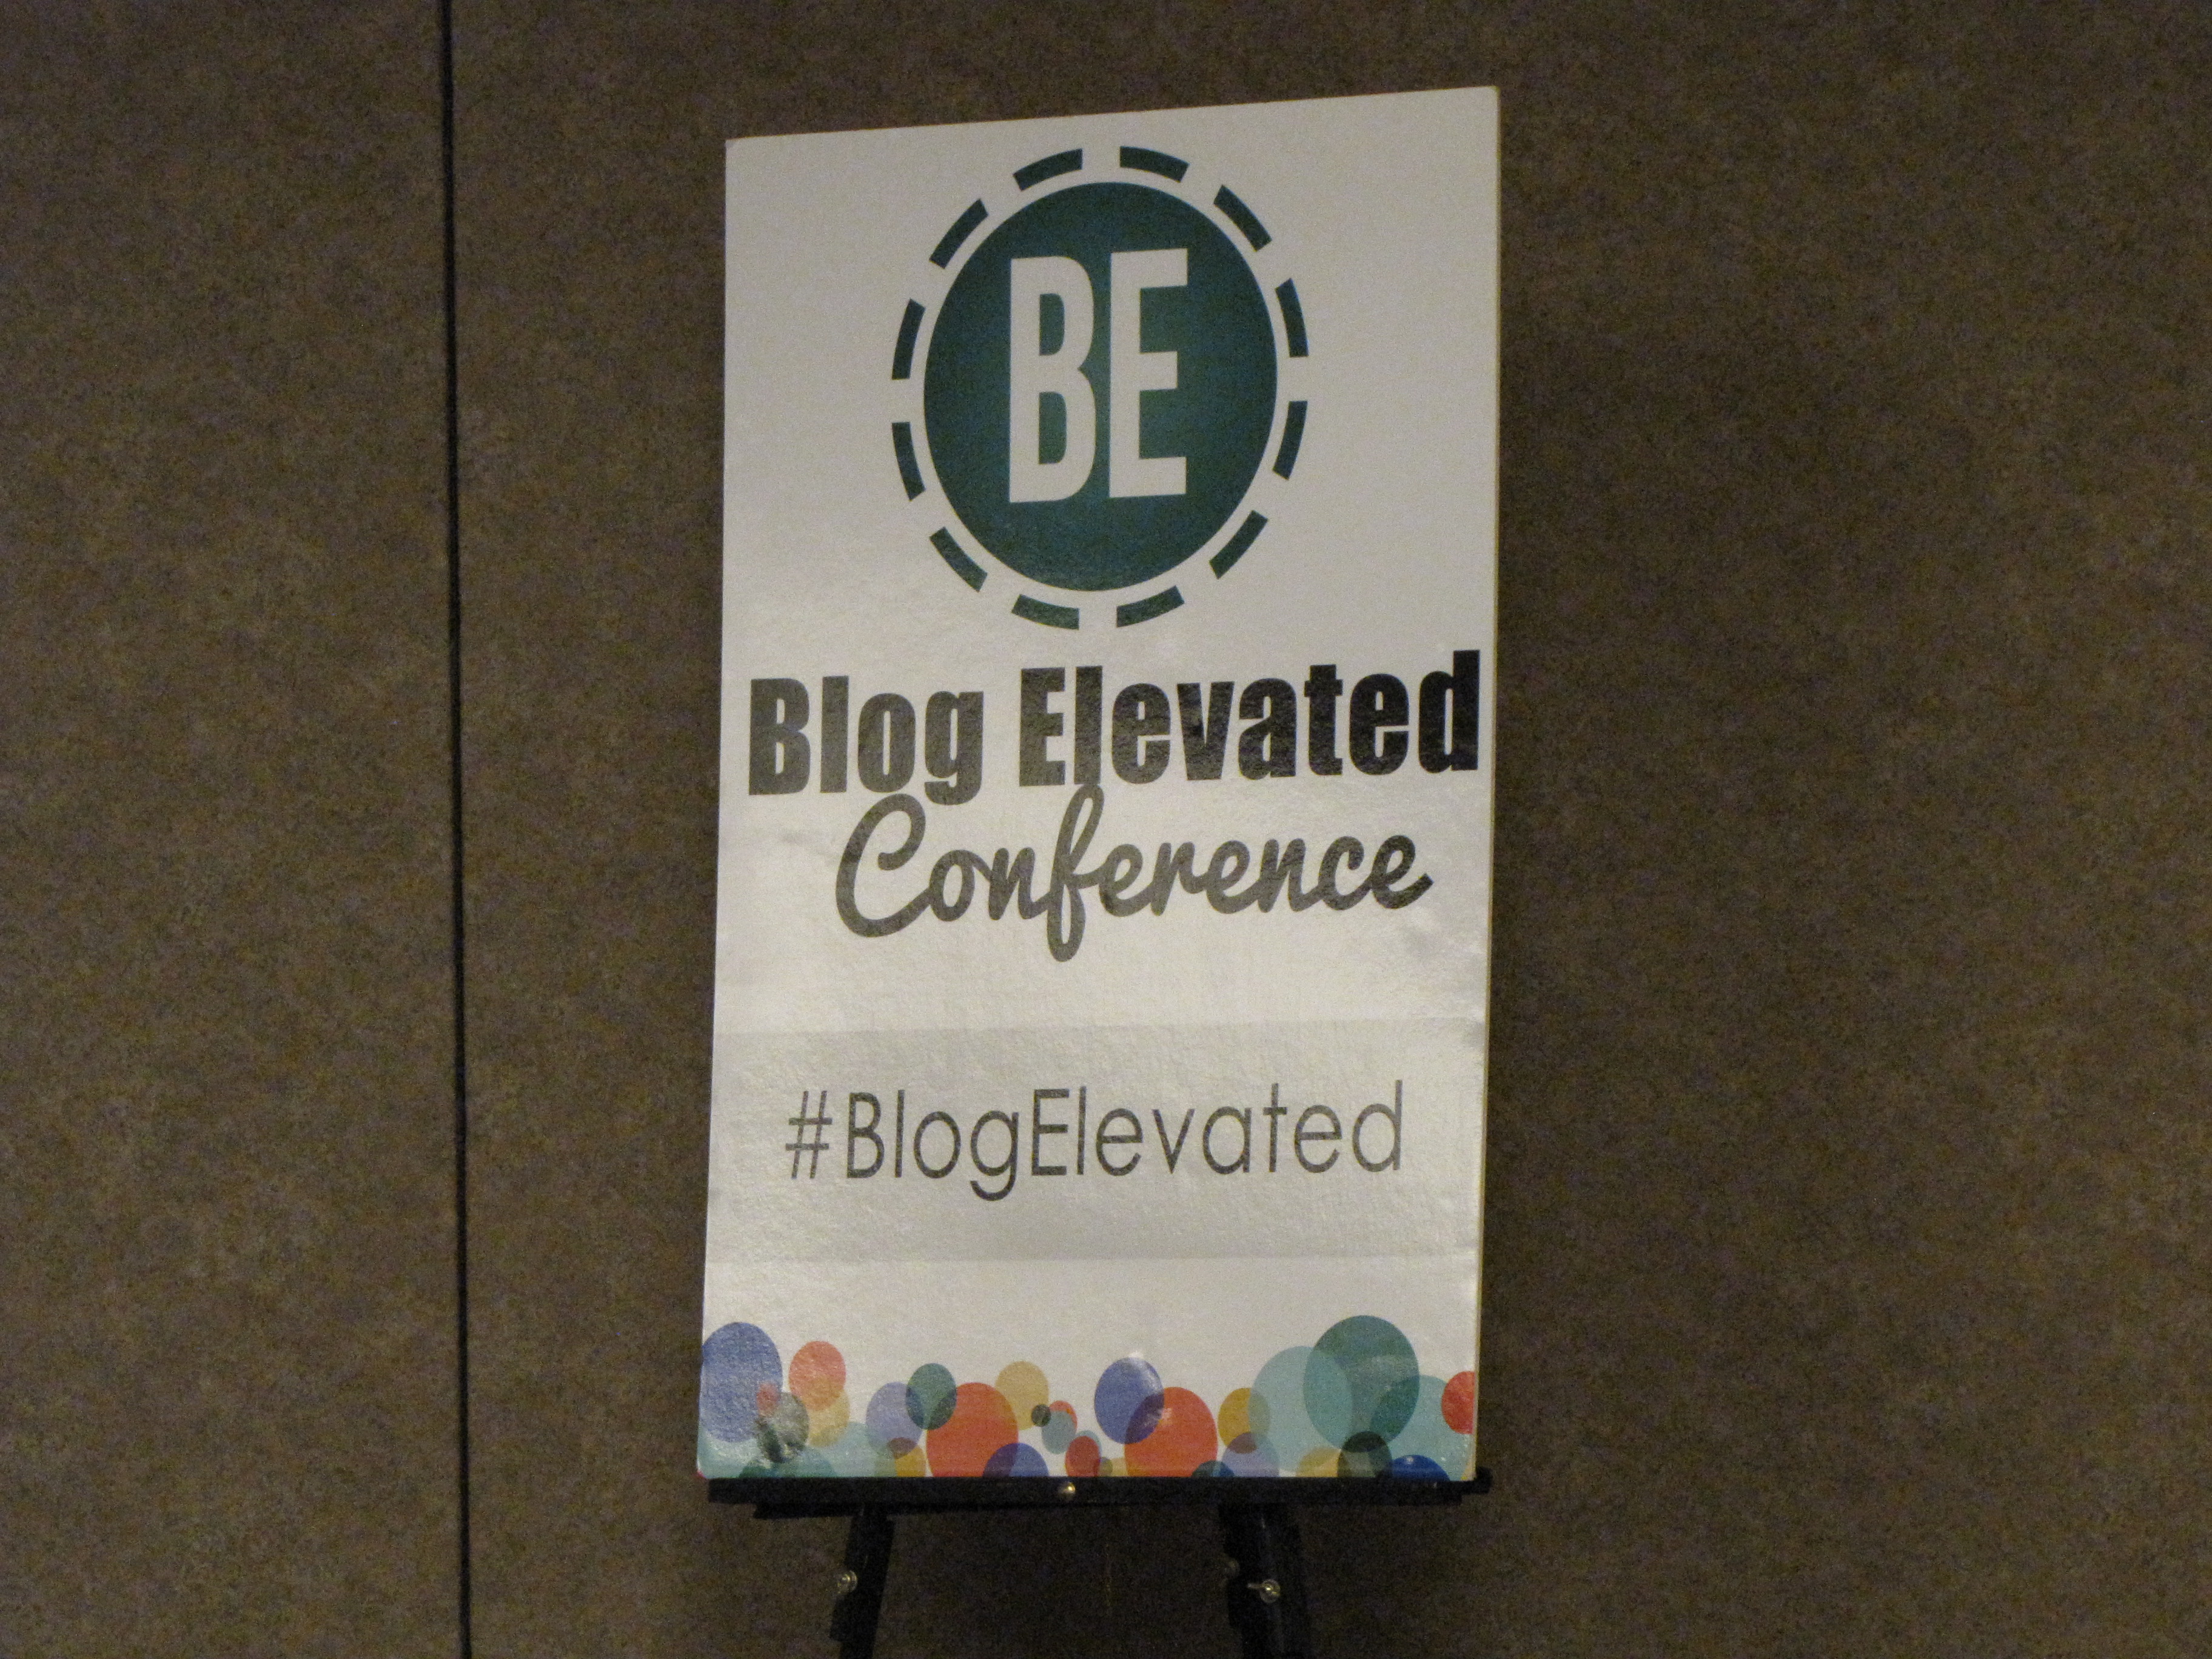 Blog elevated